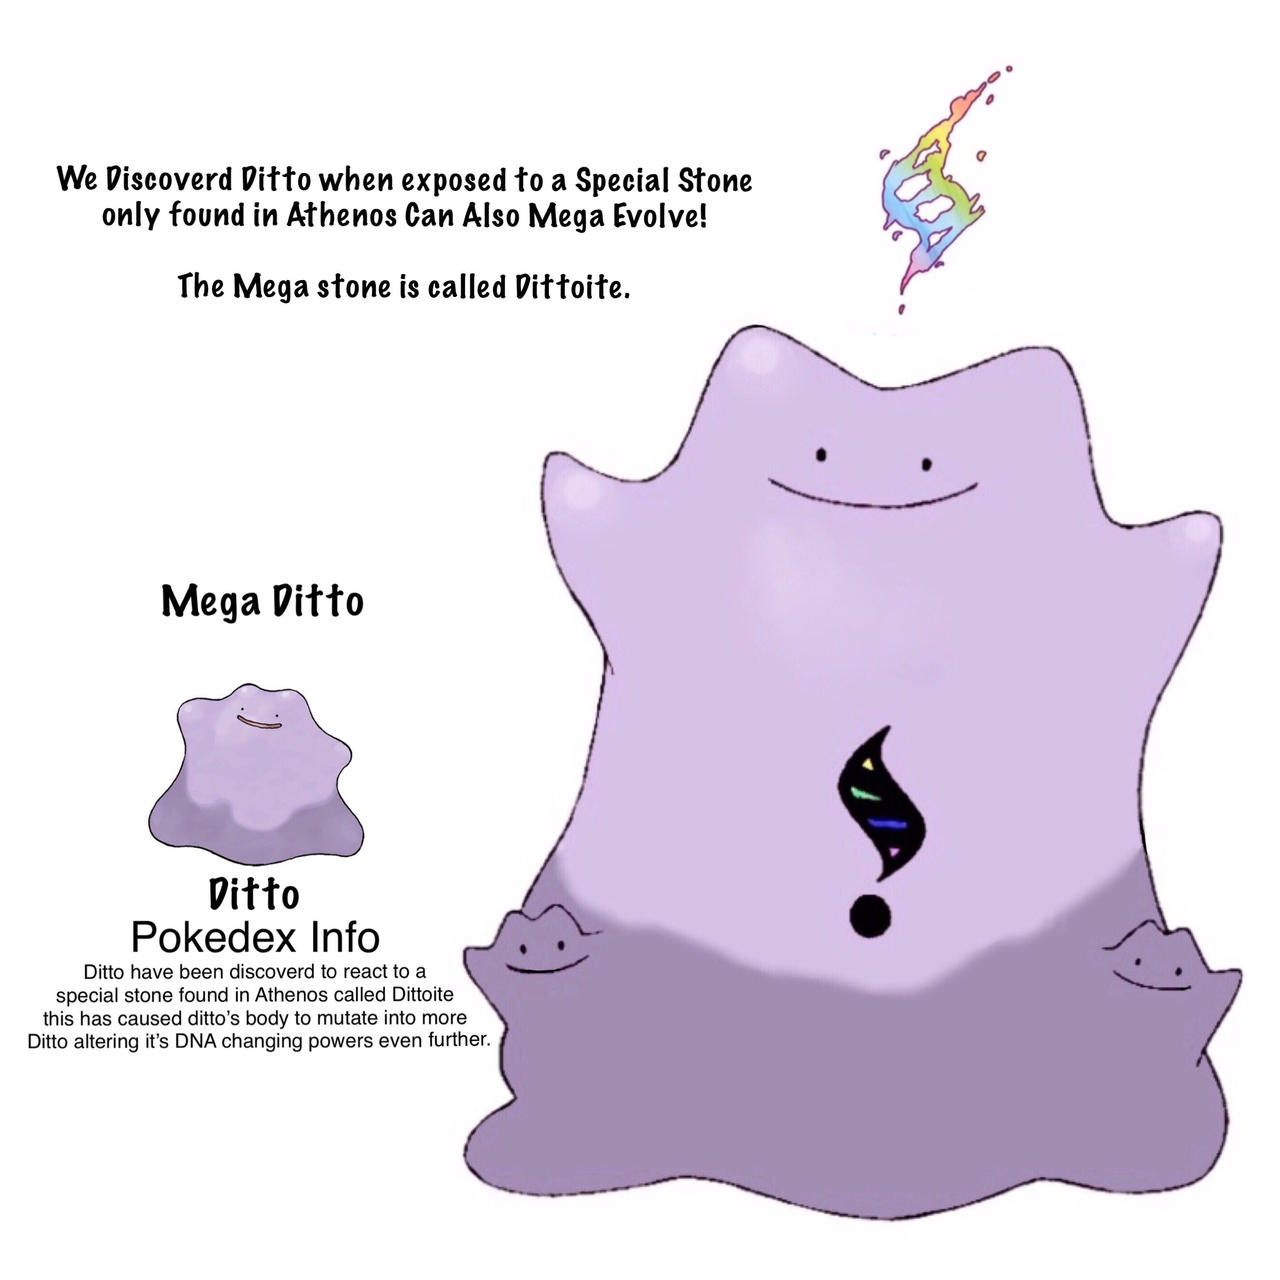 How to MEGA EVOLVE DITTO in Pokemon Go - All Ditto MEGA EVOLUTIONS